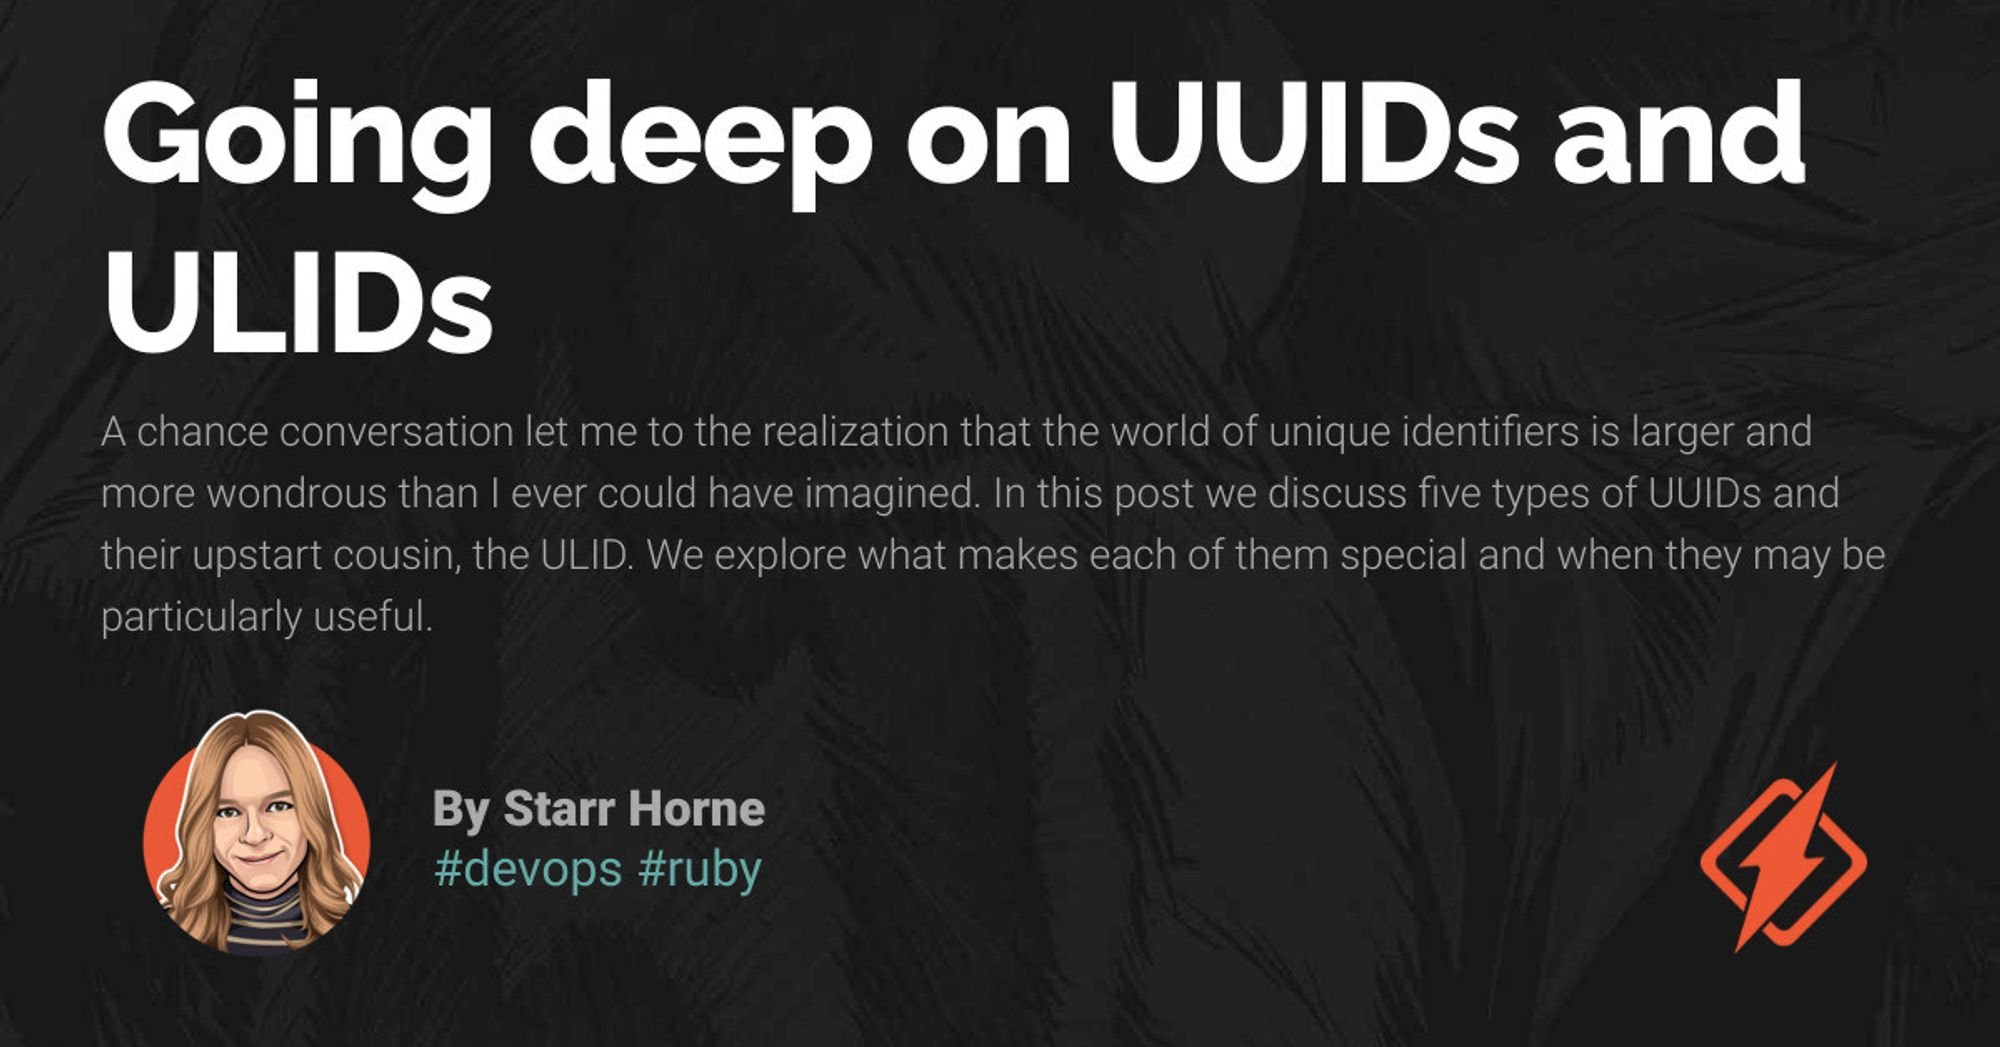 Going deep on UUIDs and ULIDs